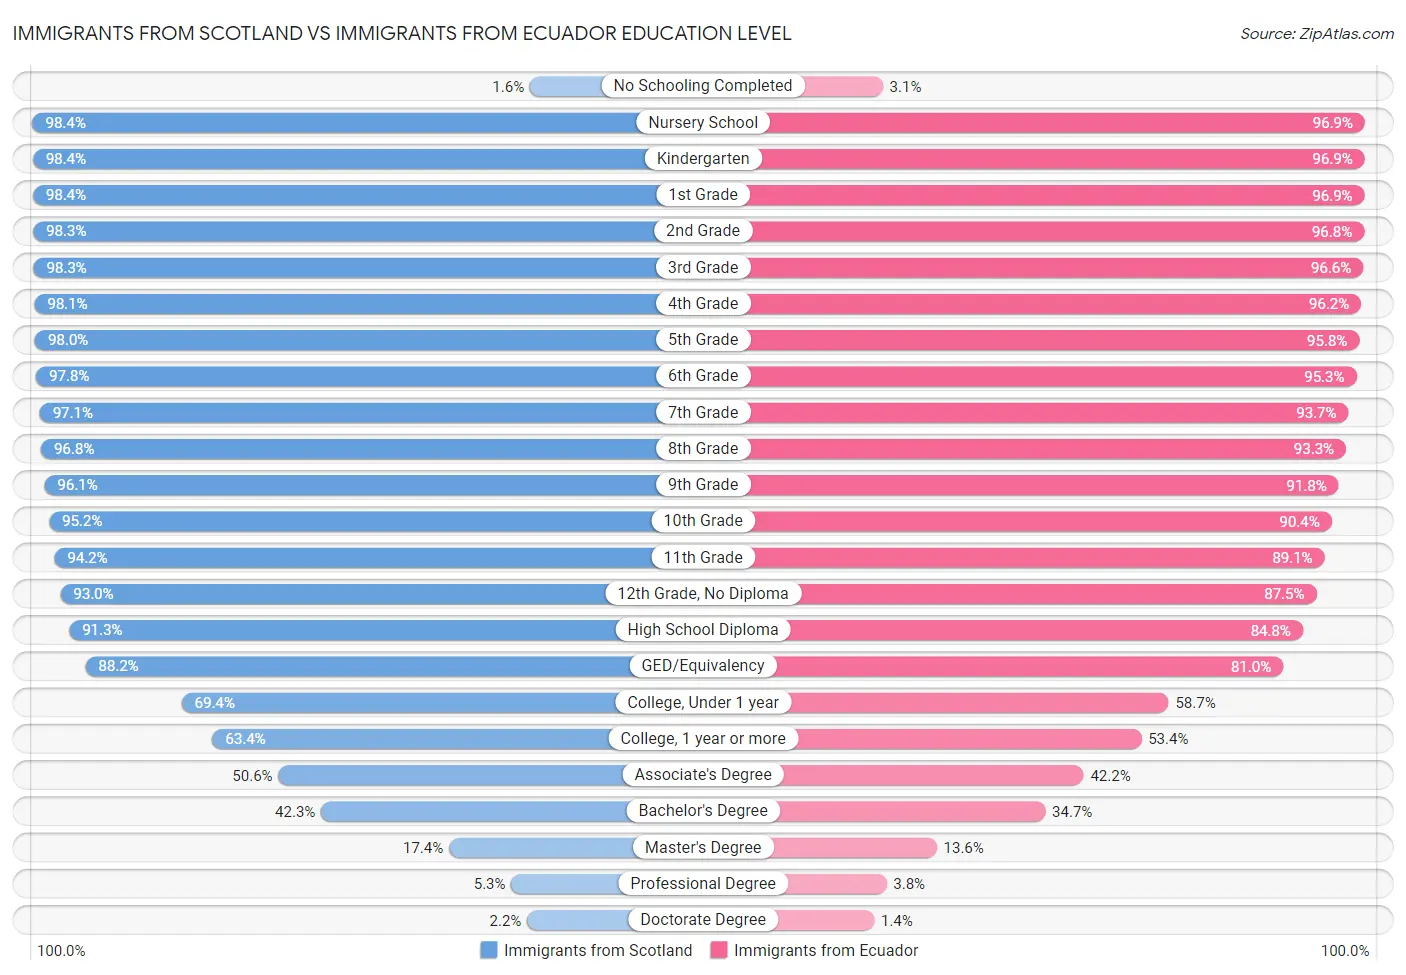 Immigrants from Scotland vs Immigrants from Ecuador Education Level